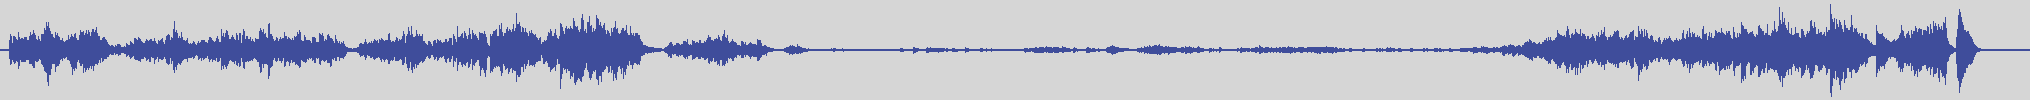 big_music_classic [BMC012]  -  [] audio wave form